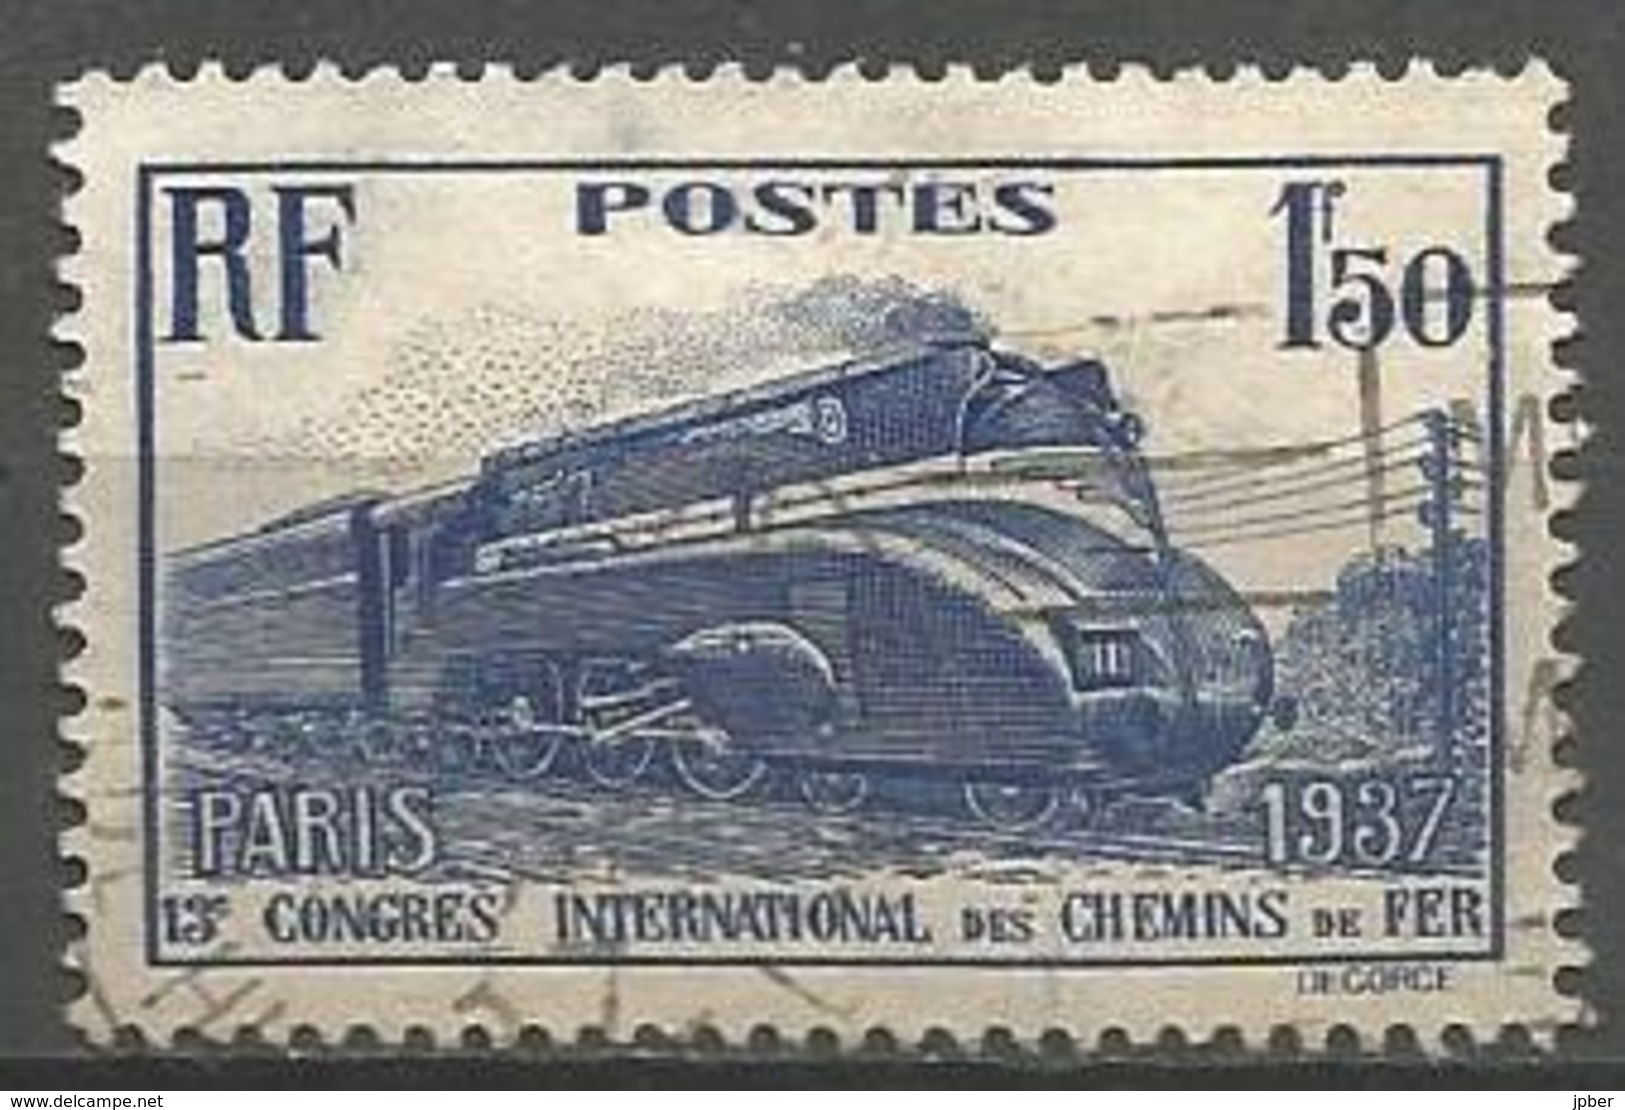 France - F1/320 - N°340  Obl. - Locomotive "Pacific" - Usati